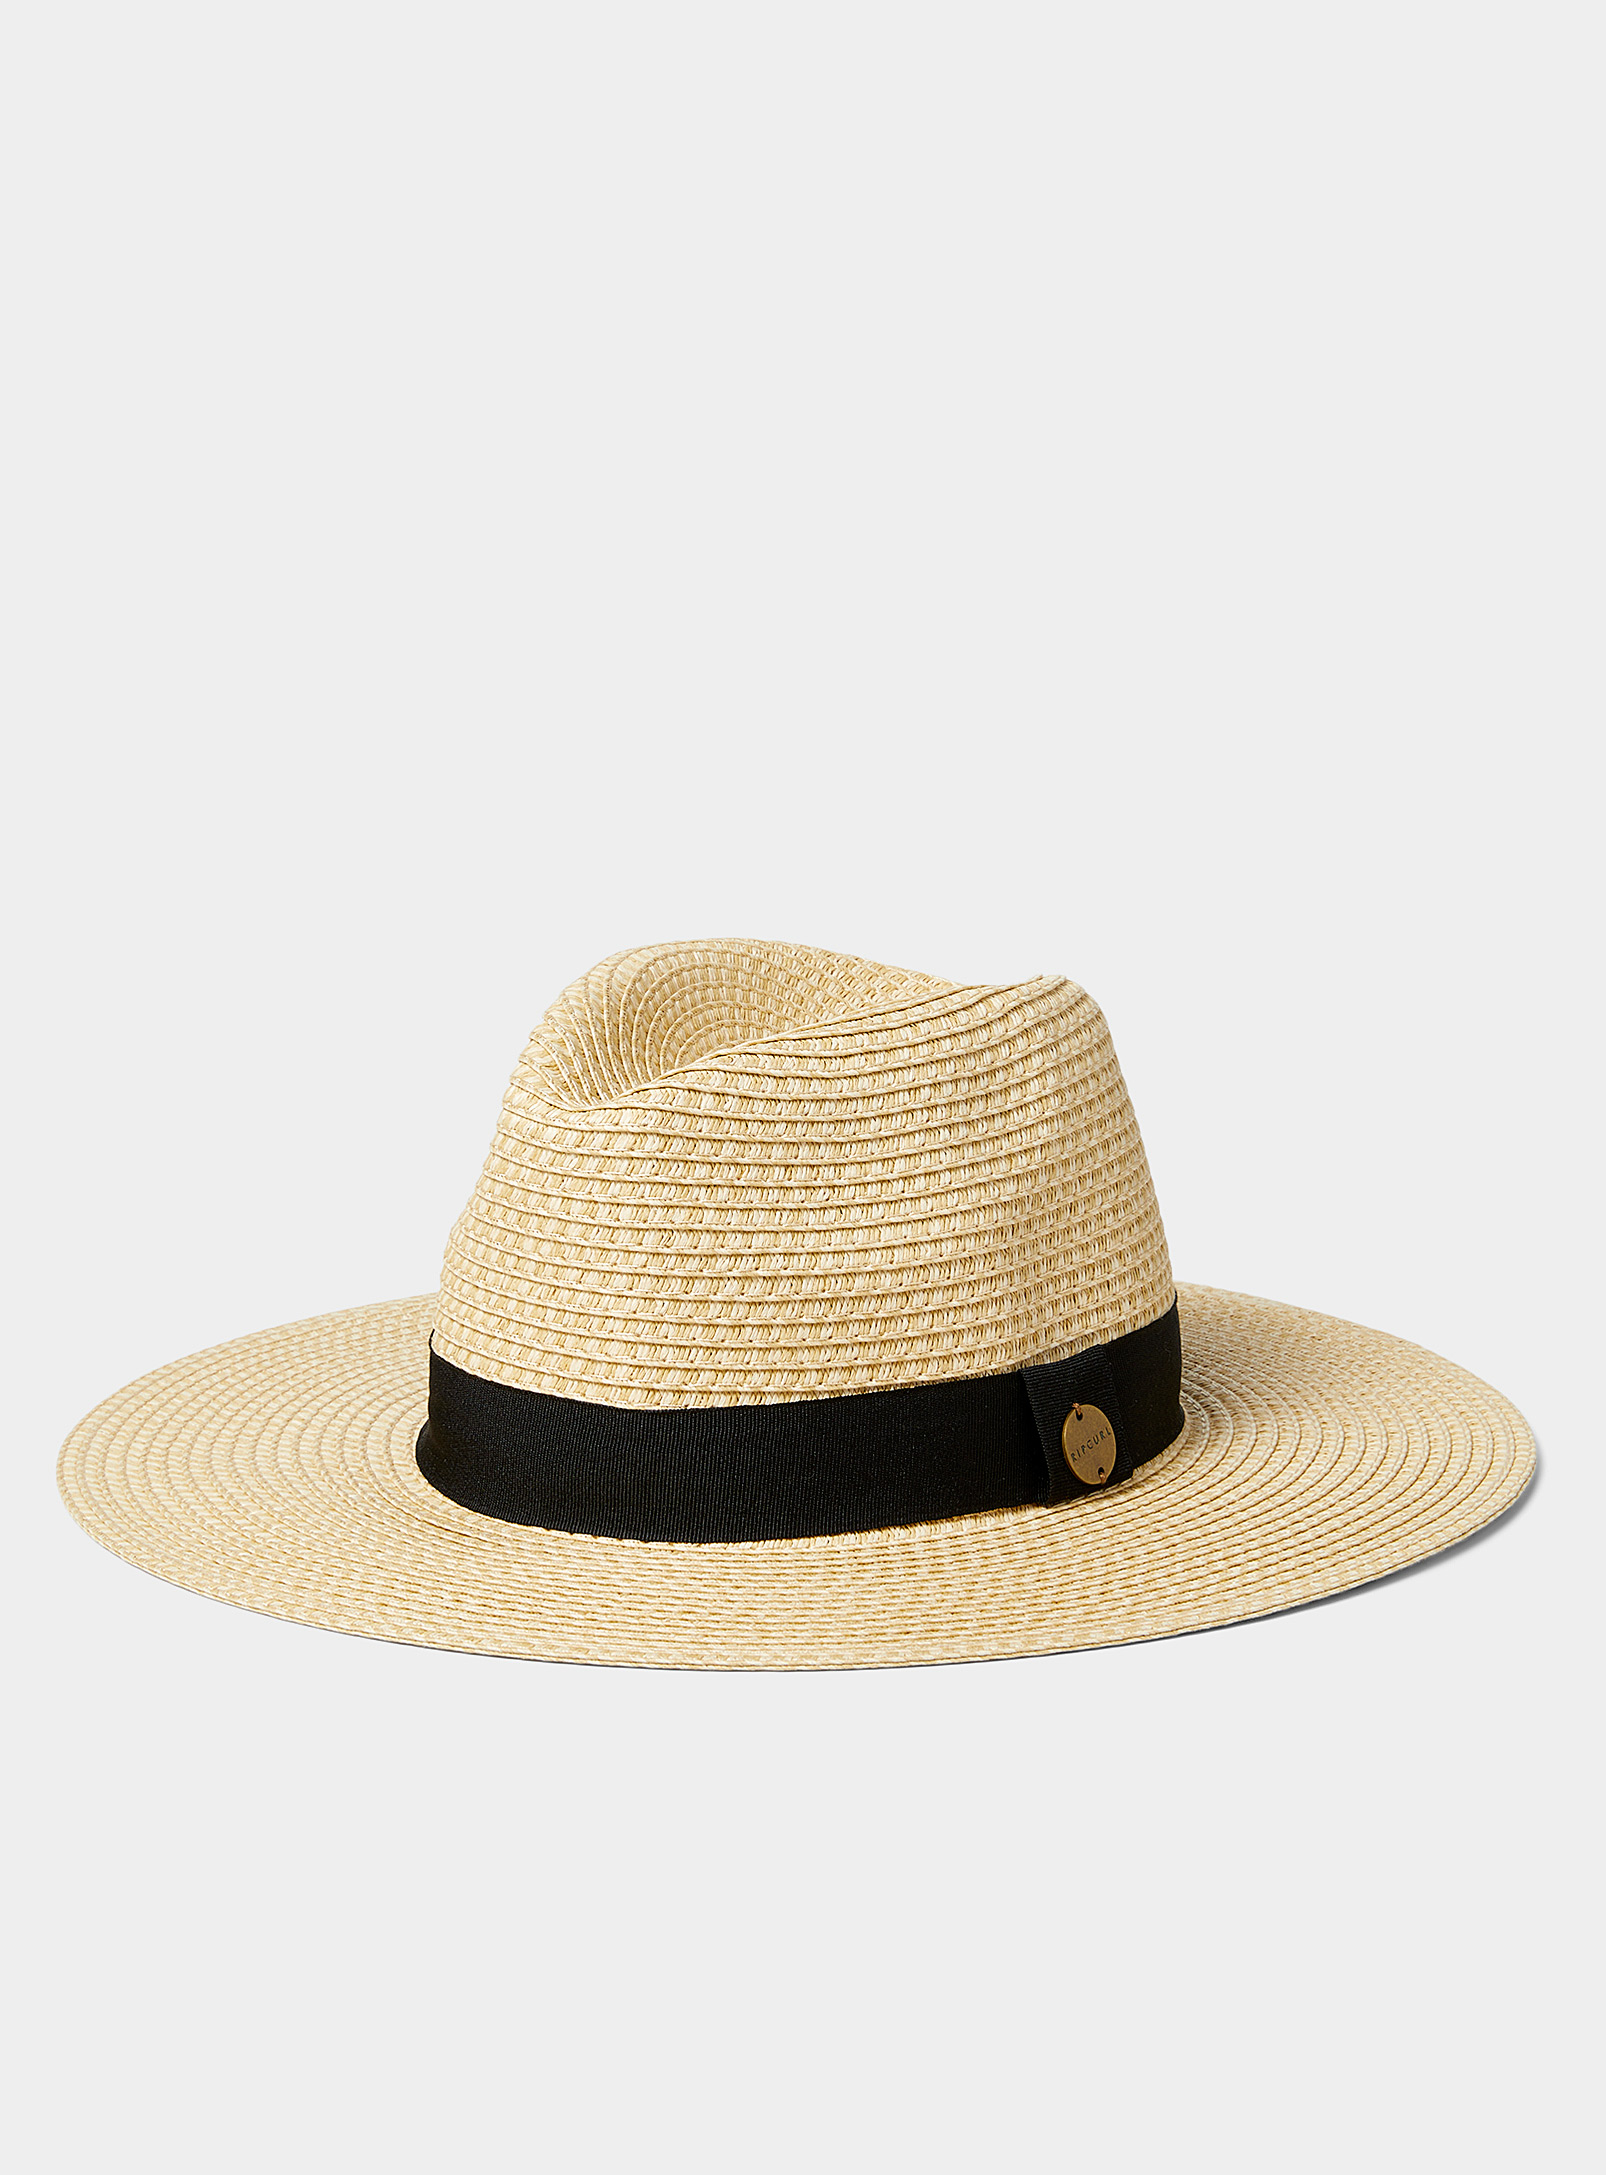 Rip Curl Straw Panama Hat In Cream Beige